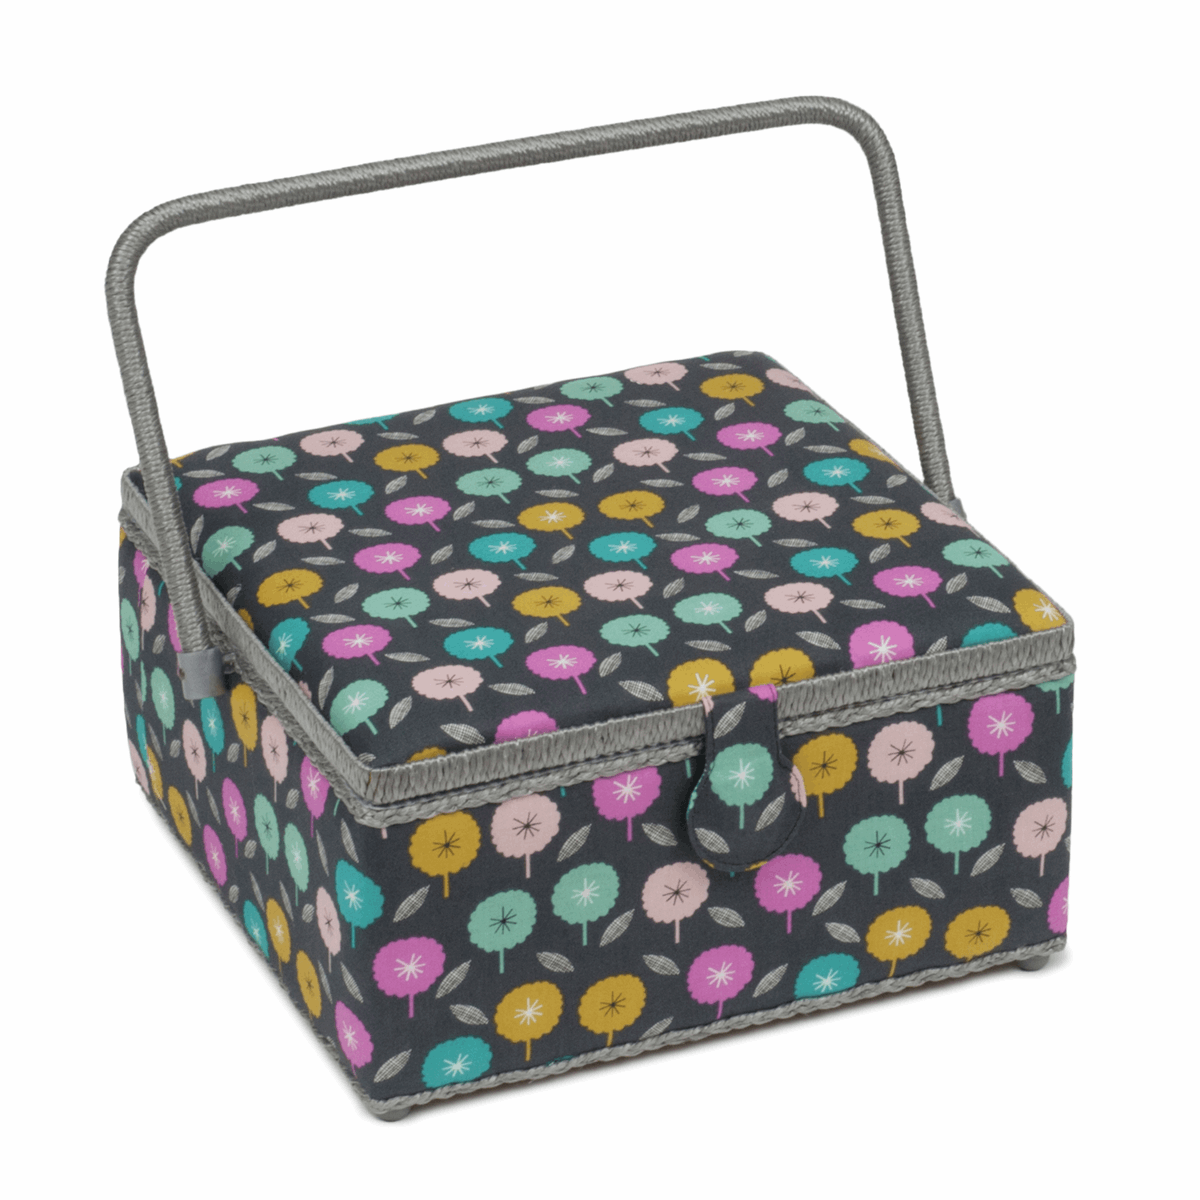 Jumbo Sewing Box Square - Confetti / Hobby Gift